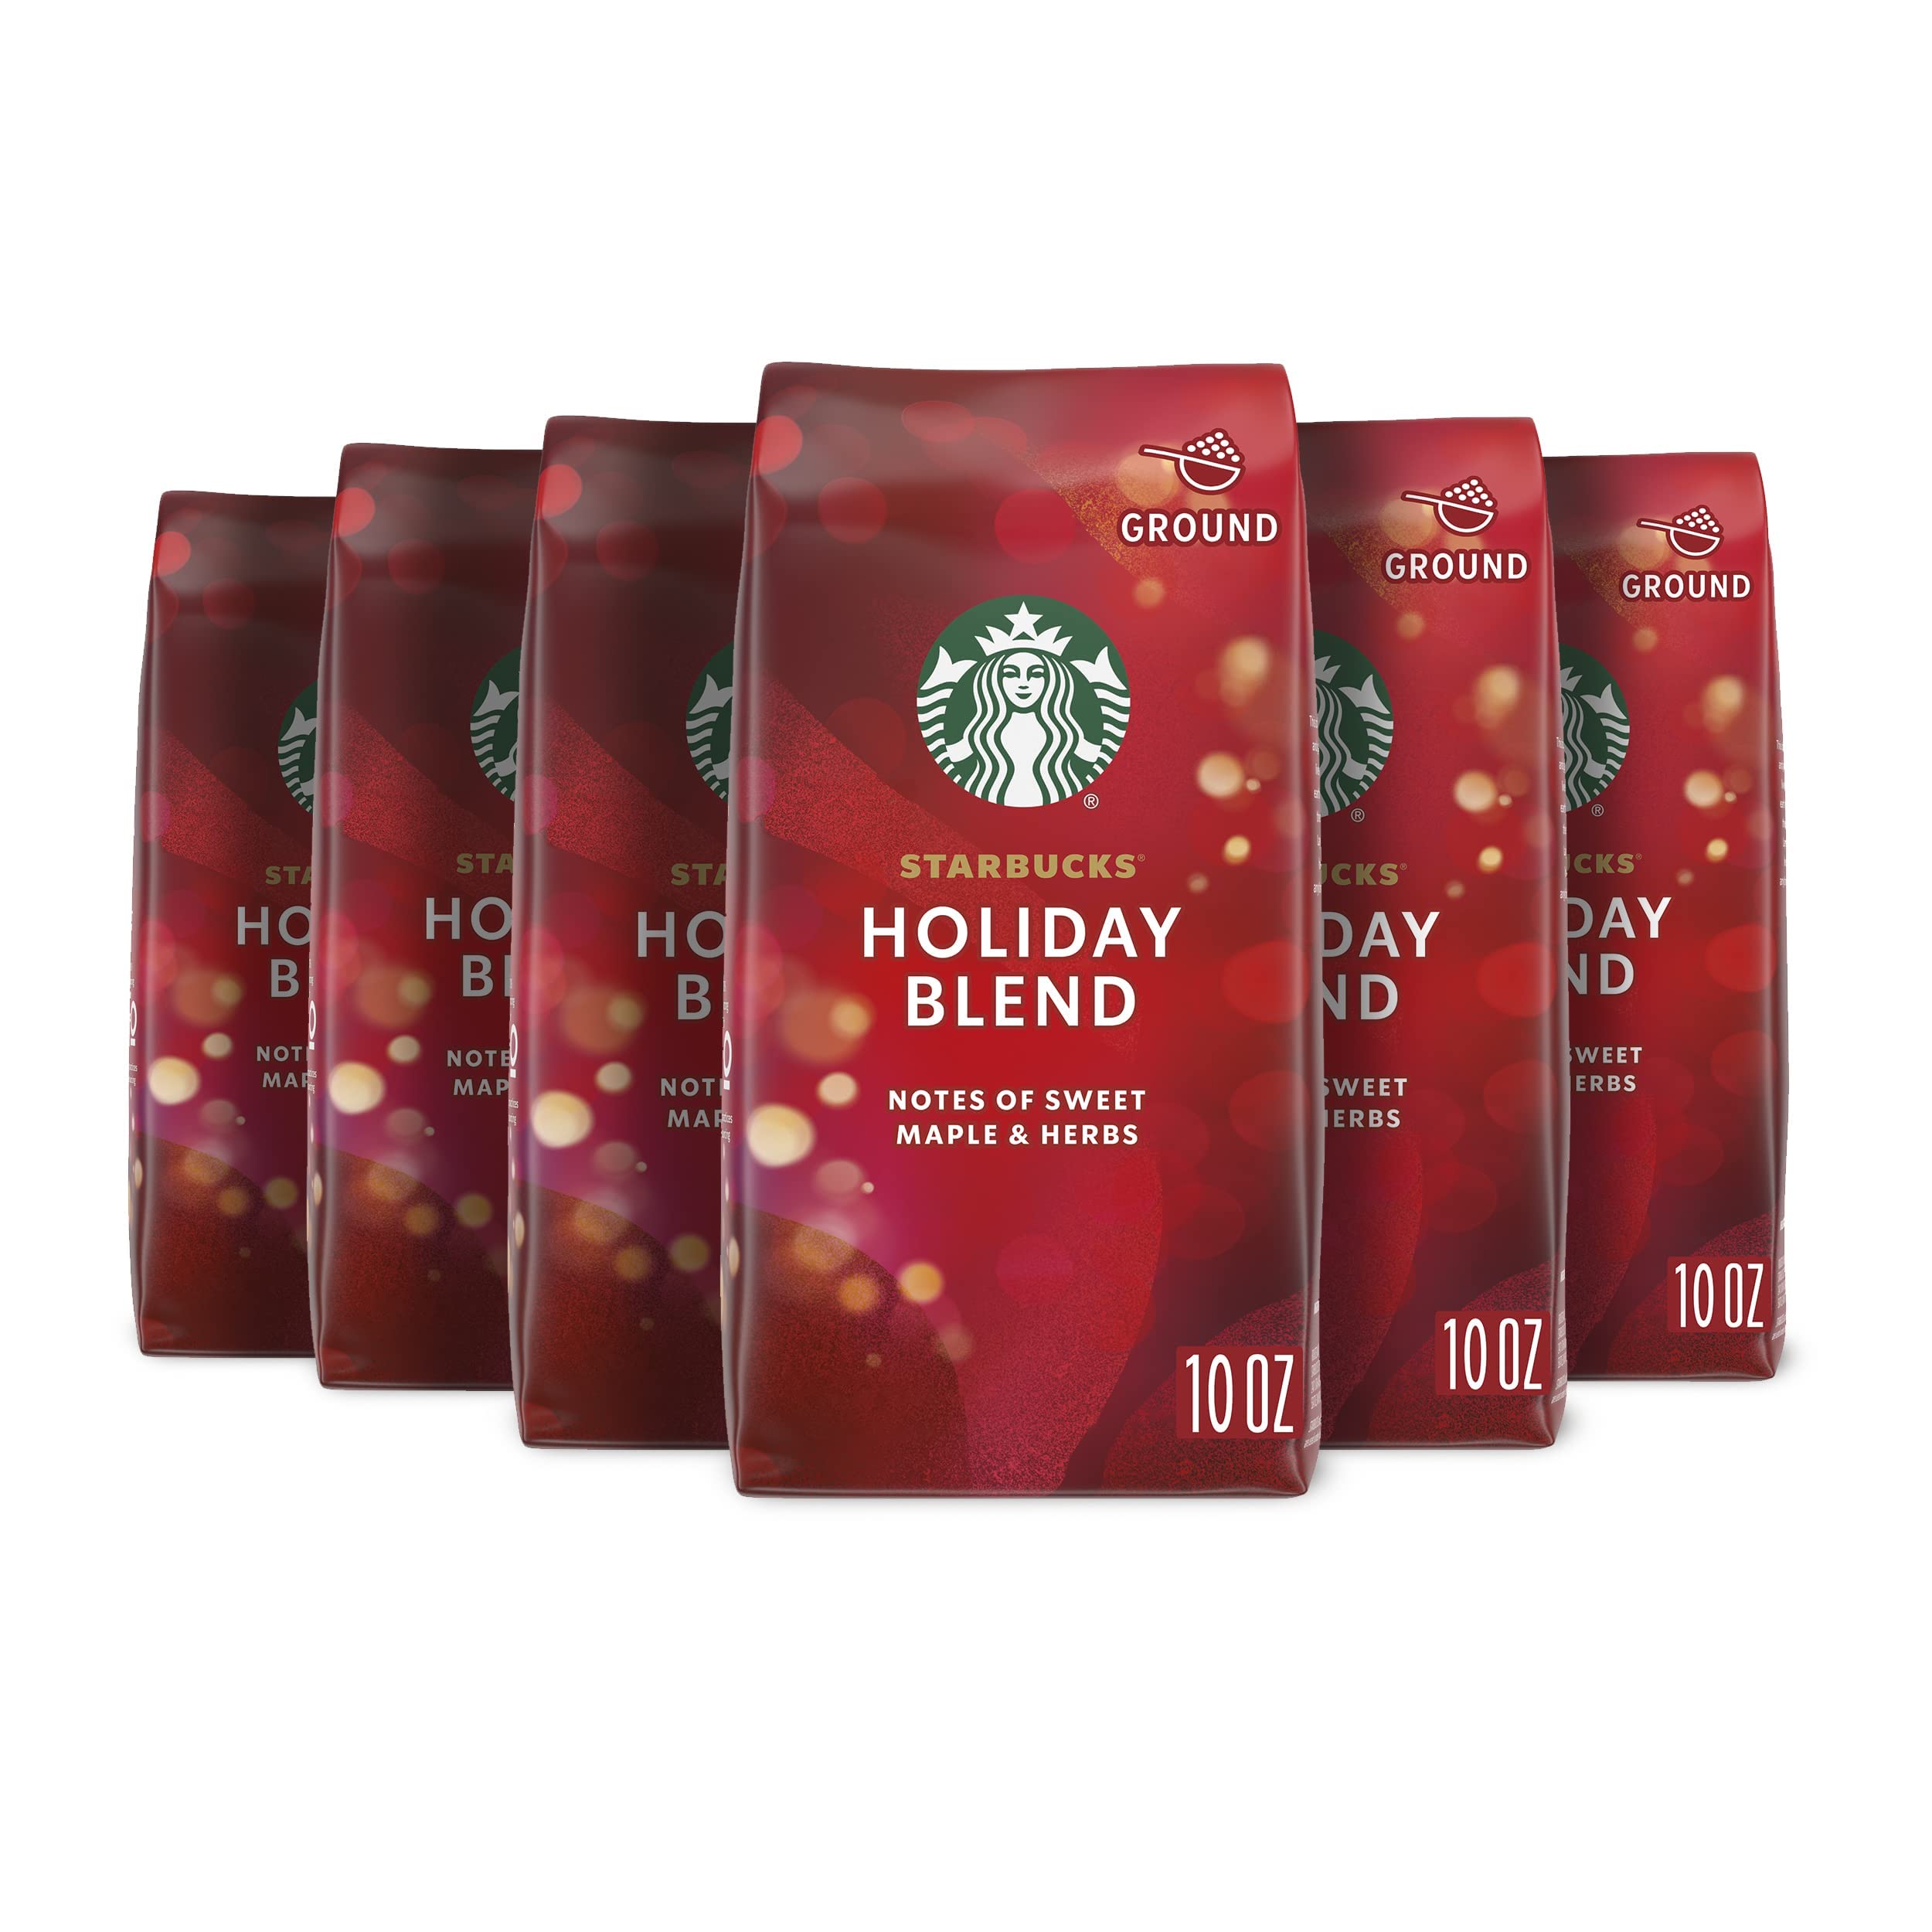 Starbucks Ground Coffee, Holiday Blend Medium Roast Coffee, 100% Arabica, Limited Edition Holiday Coffee, 6 Bags (10 Oz Each) $30.20 Amazon Warehouse